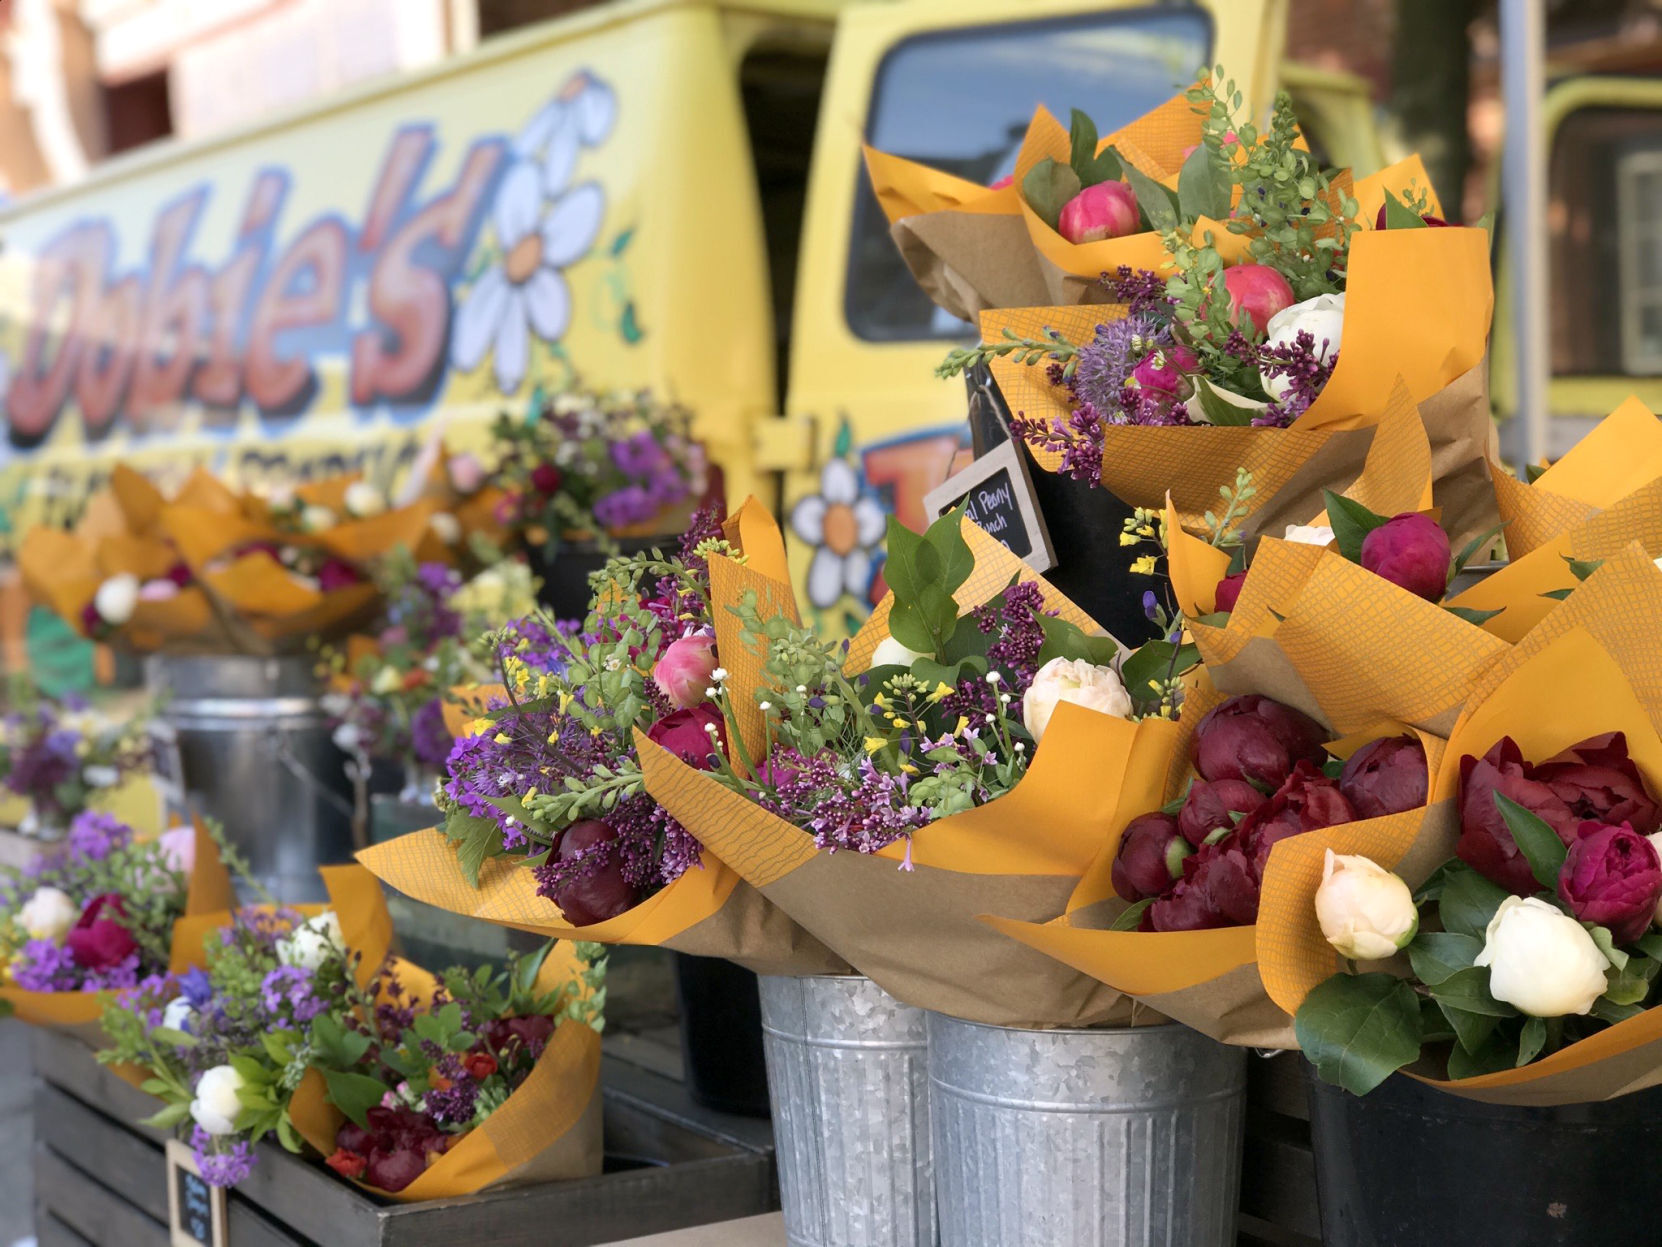 Dobie’s Flowers & Produce, based in Durango, Iowa.    PHOTO CREDIT: Contributed